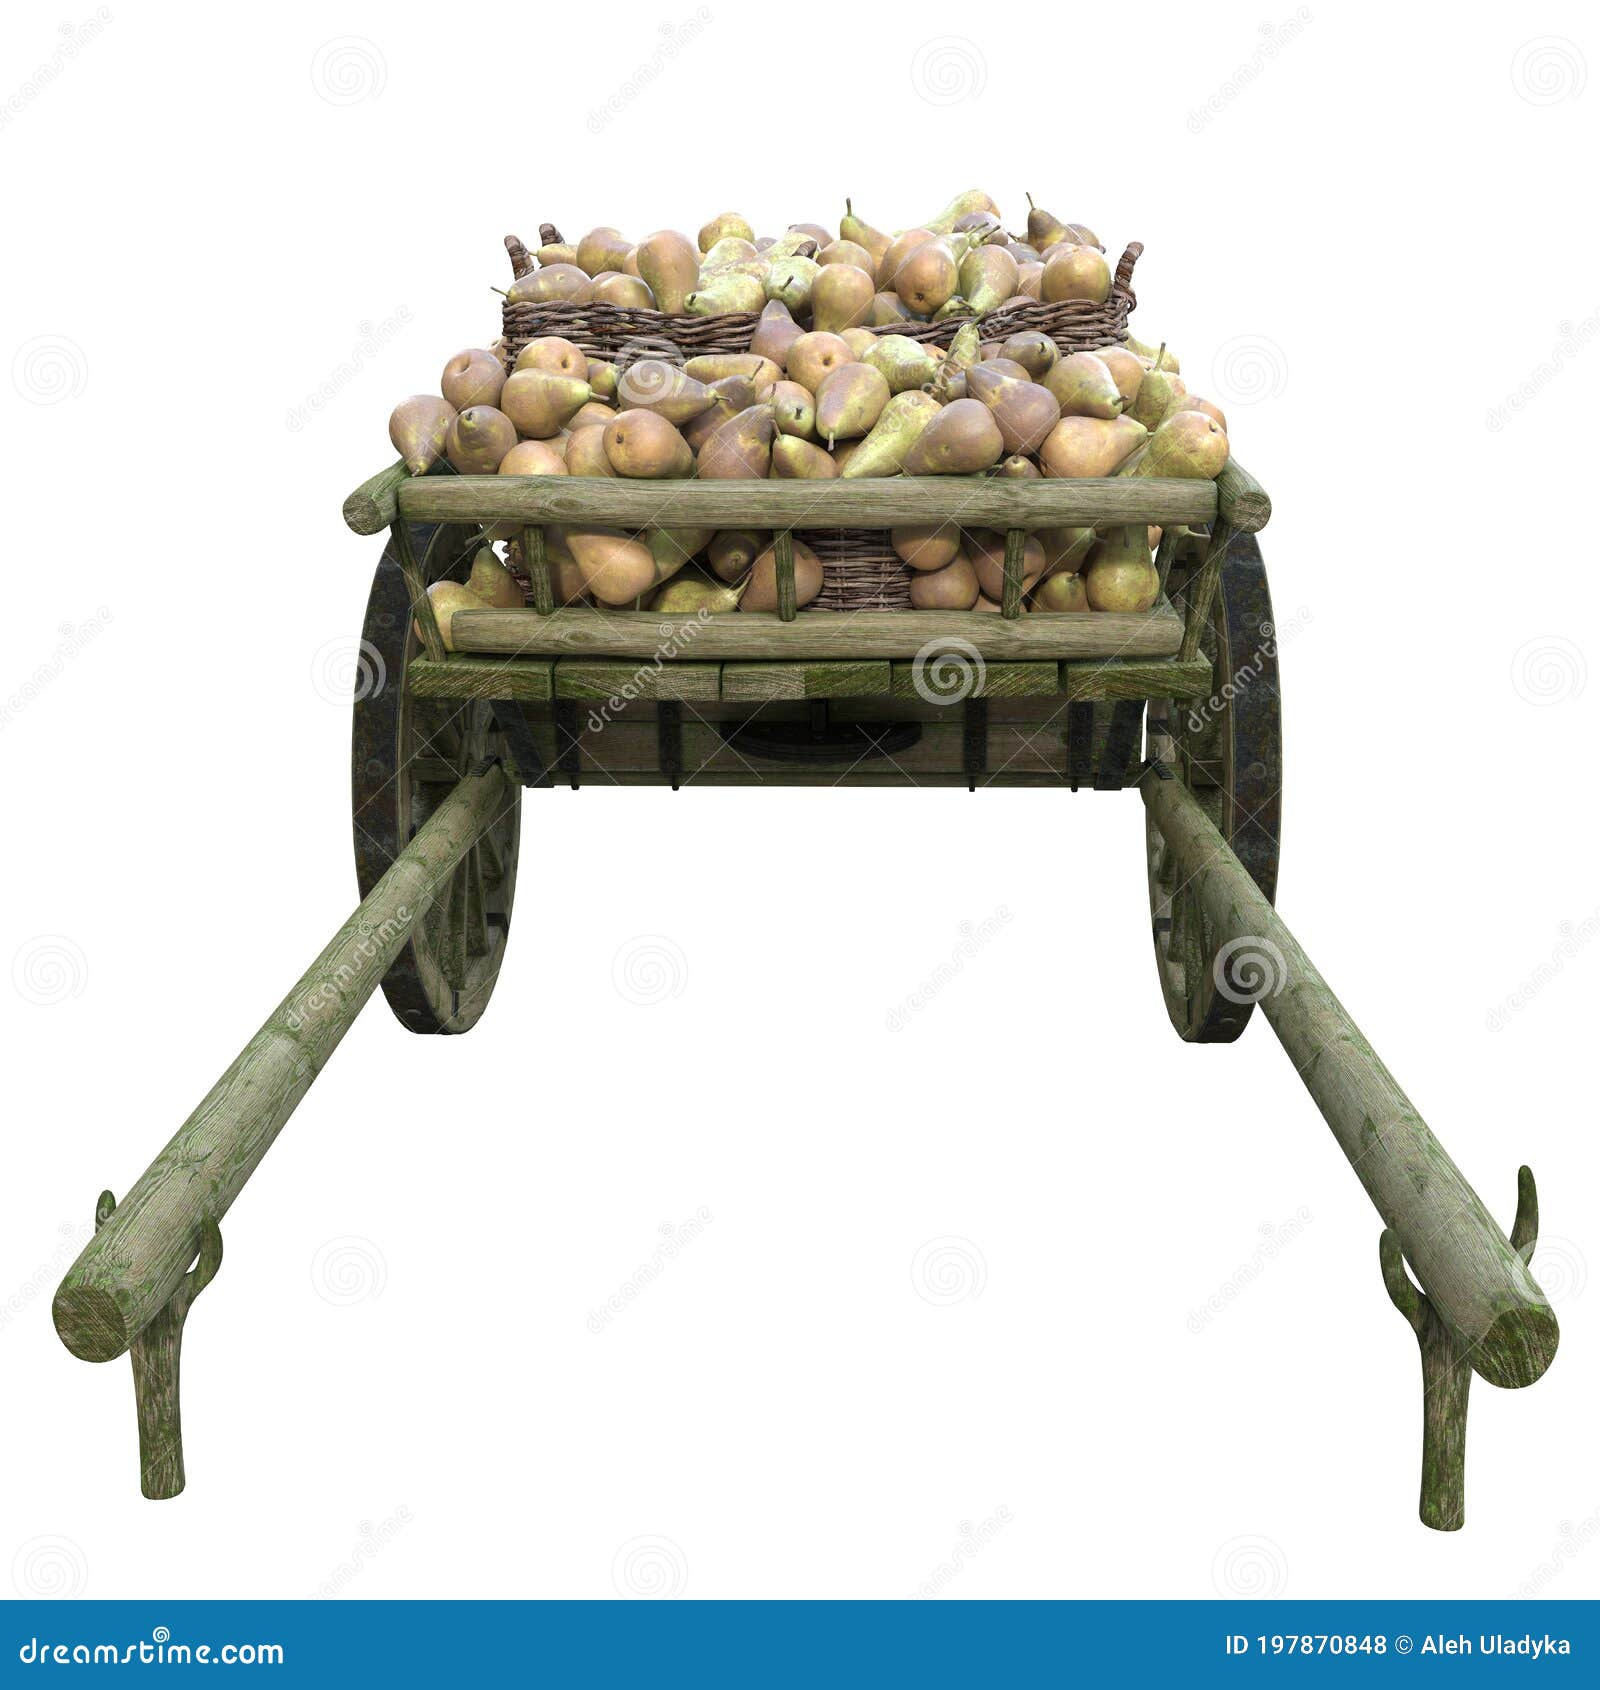 harvest ripe pears in metal buckets in a wooden cart